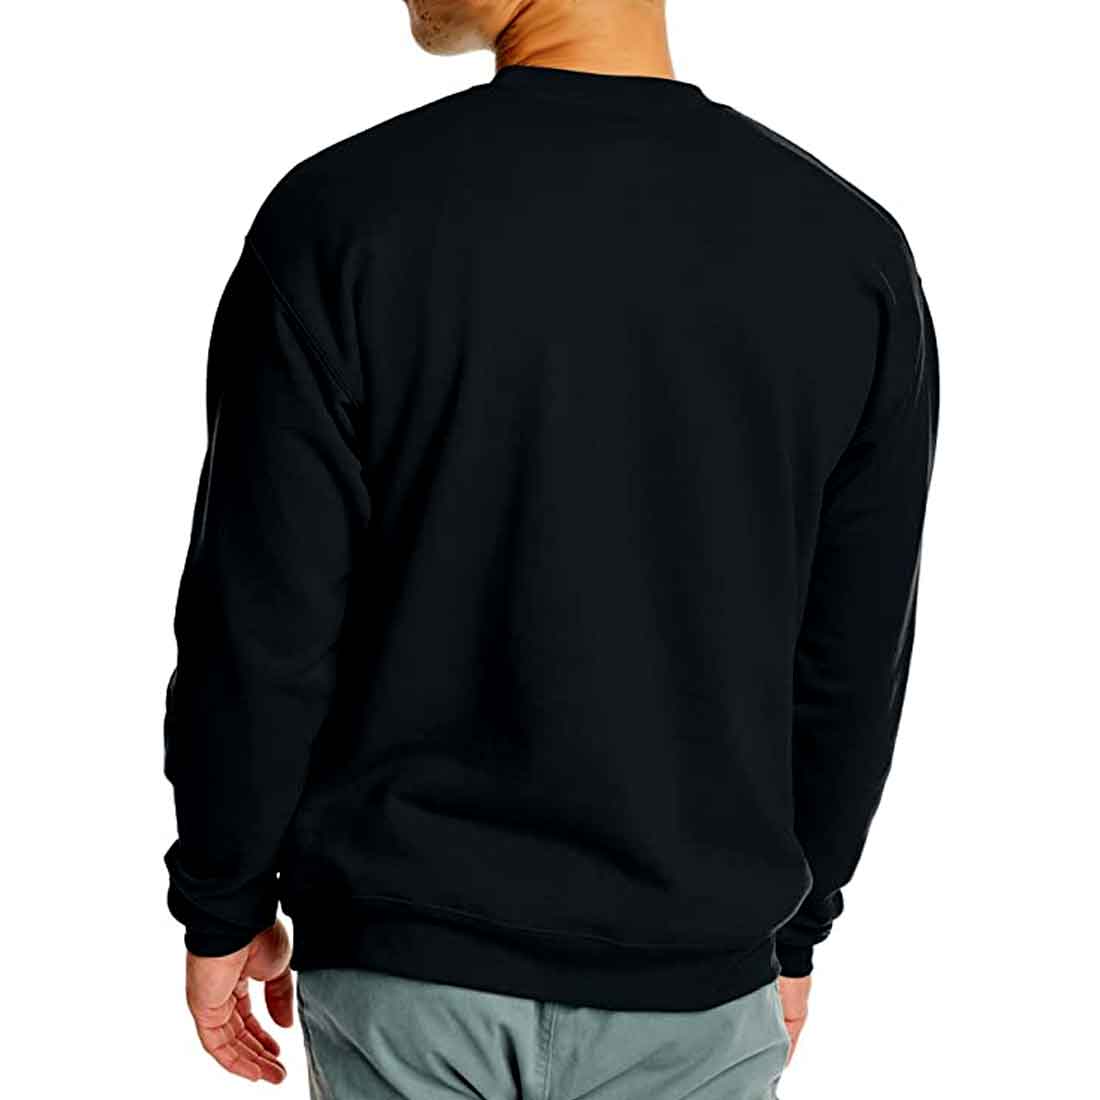 Cotton Designer Sweatshirts for Men Round Neck - Scorpio